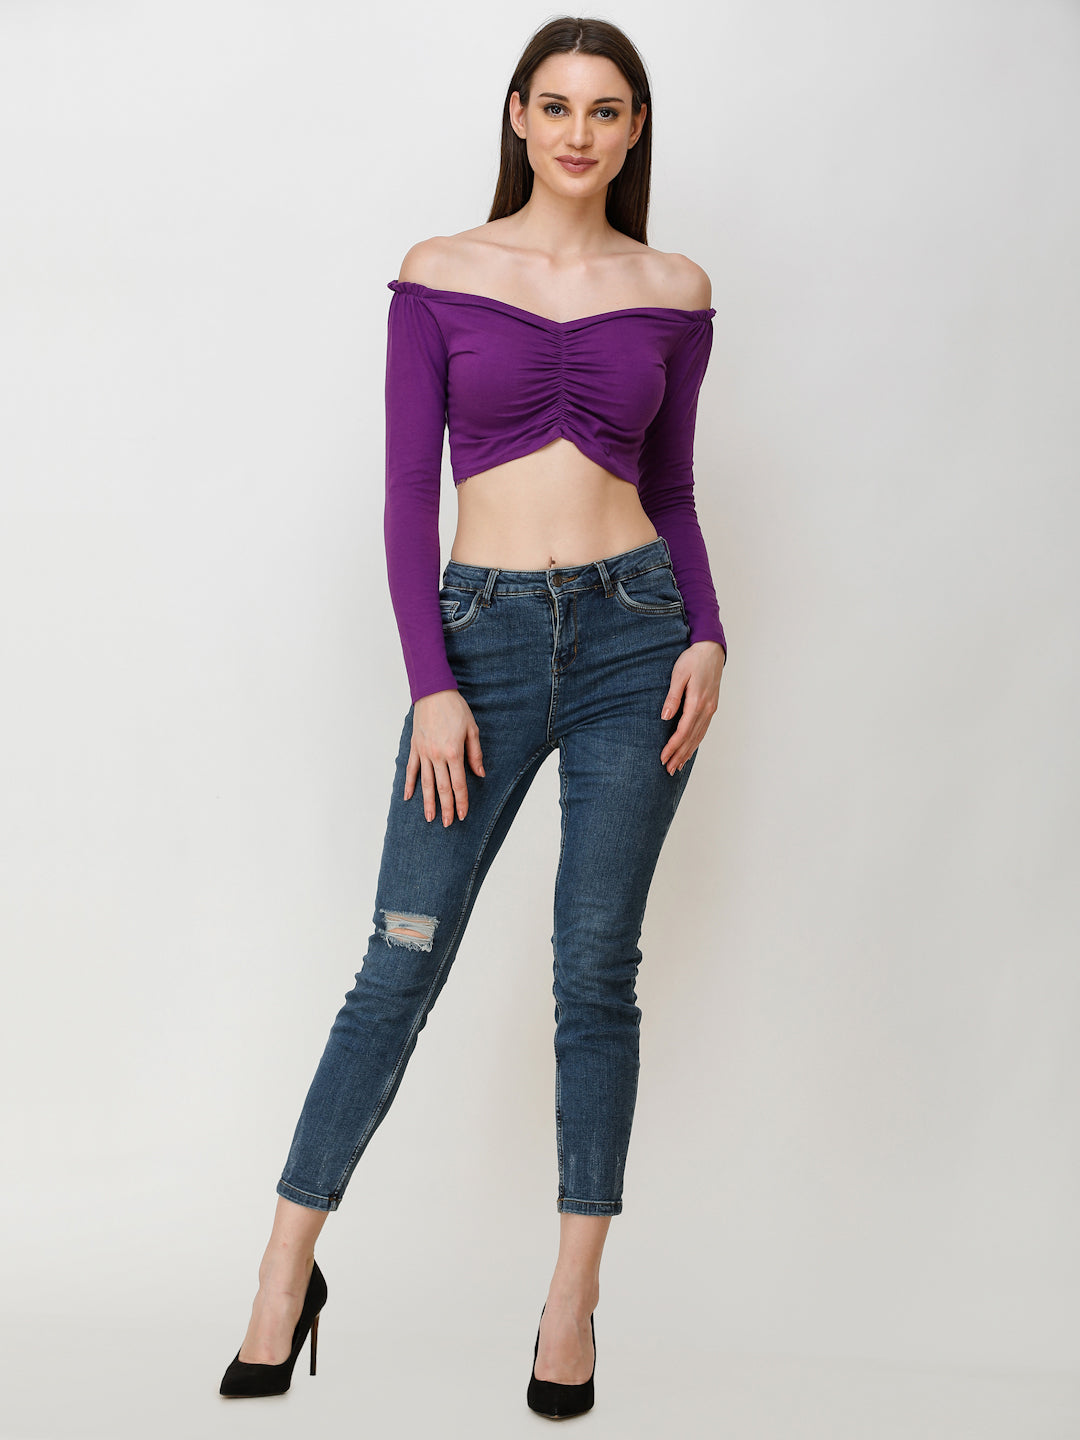 SCORPIUS Women Purple Solid Bardot Crop Top